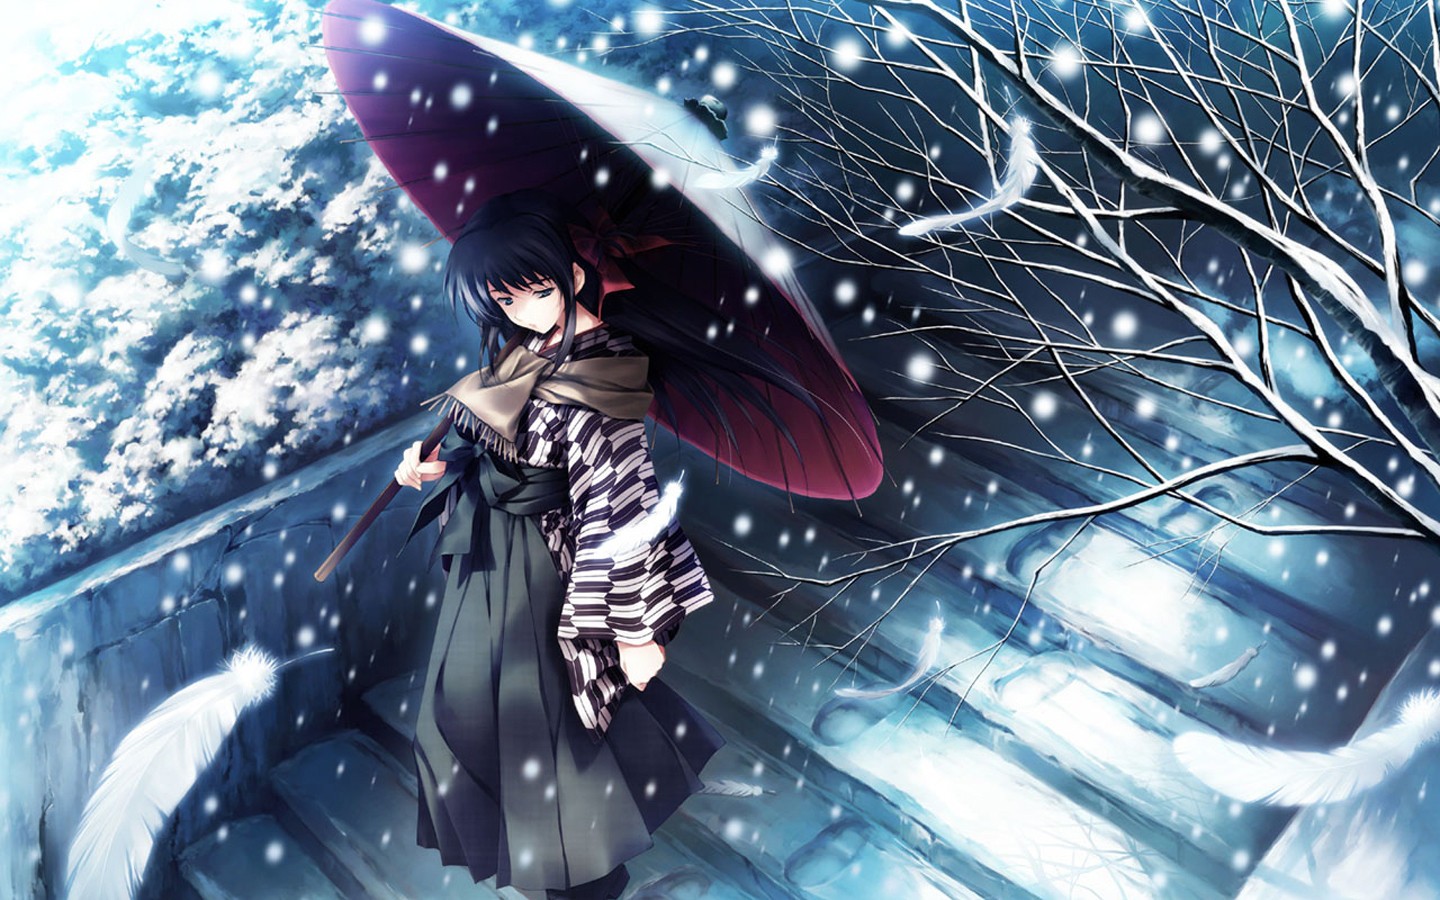 Anime 1440x900 anime anime girls umbrella snow winter cyan Sugina Miki women with umbrella black hair women outdoors looking away cold outdoors dress